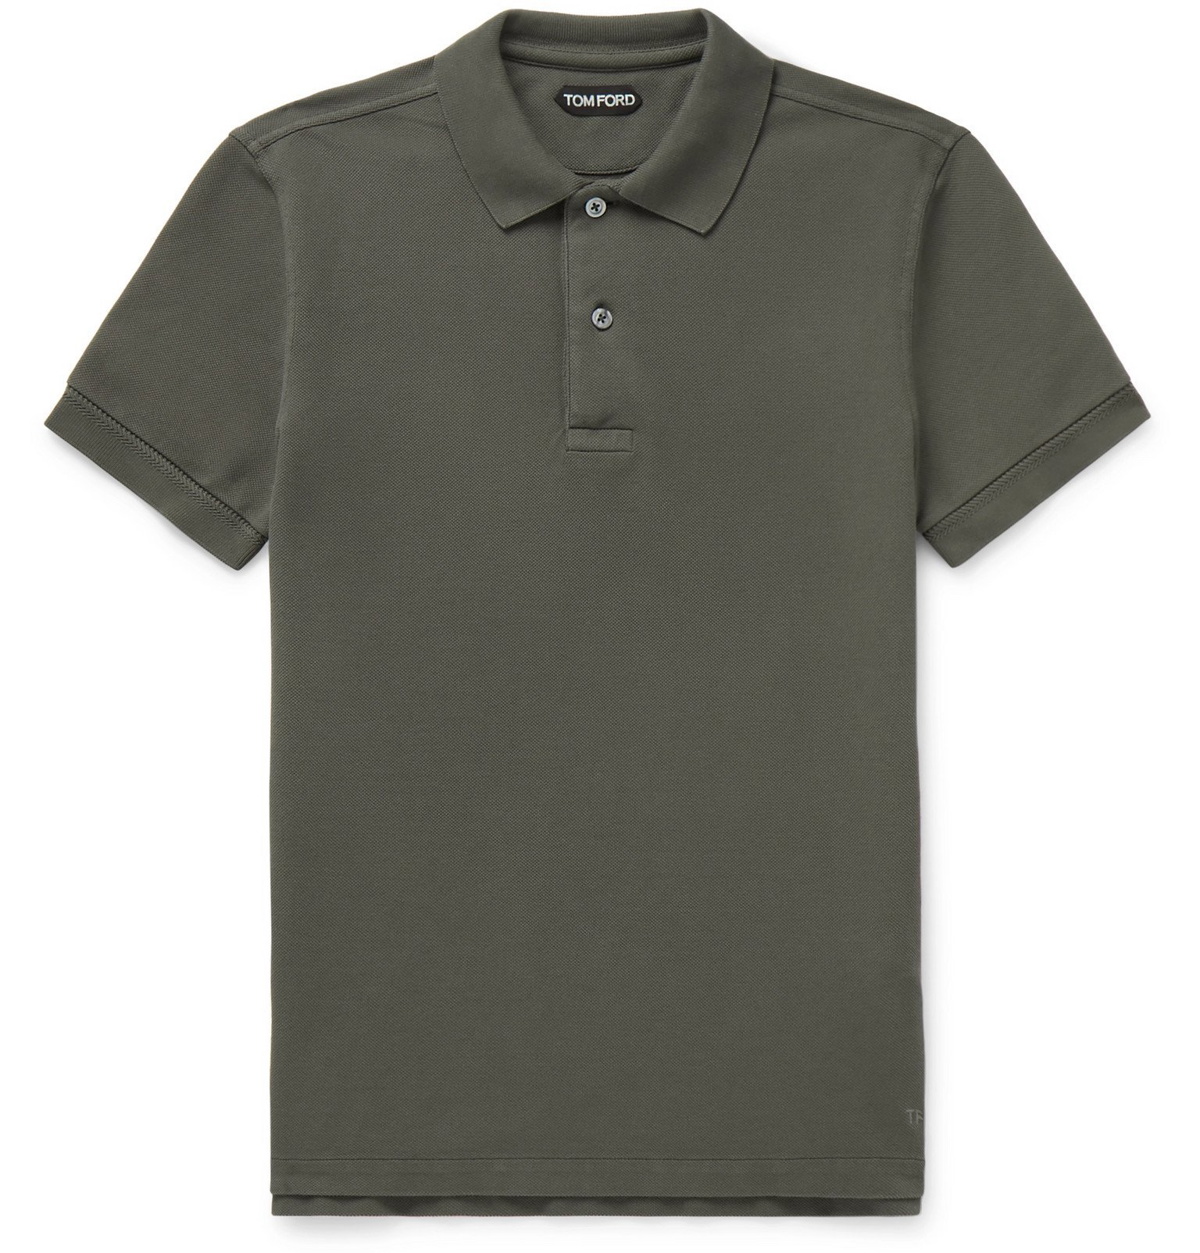 TOM FORD - Slim-Fit Cotton-Piqué Polo Shirt - Green TOM FORD